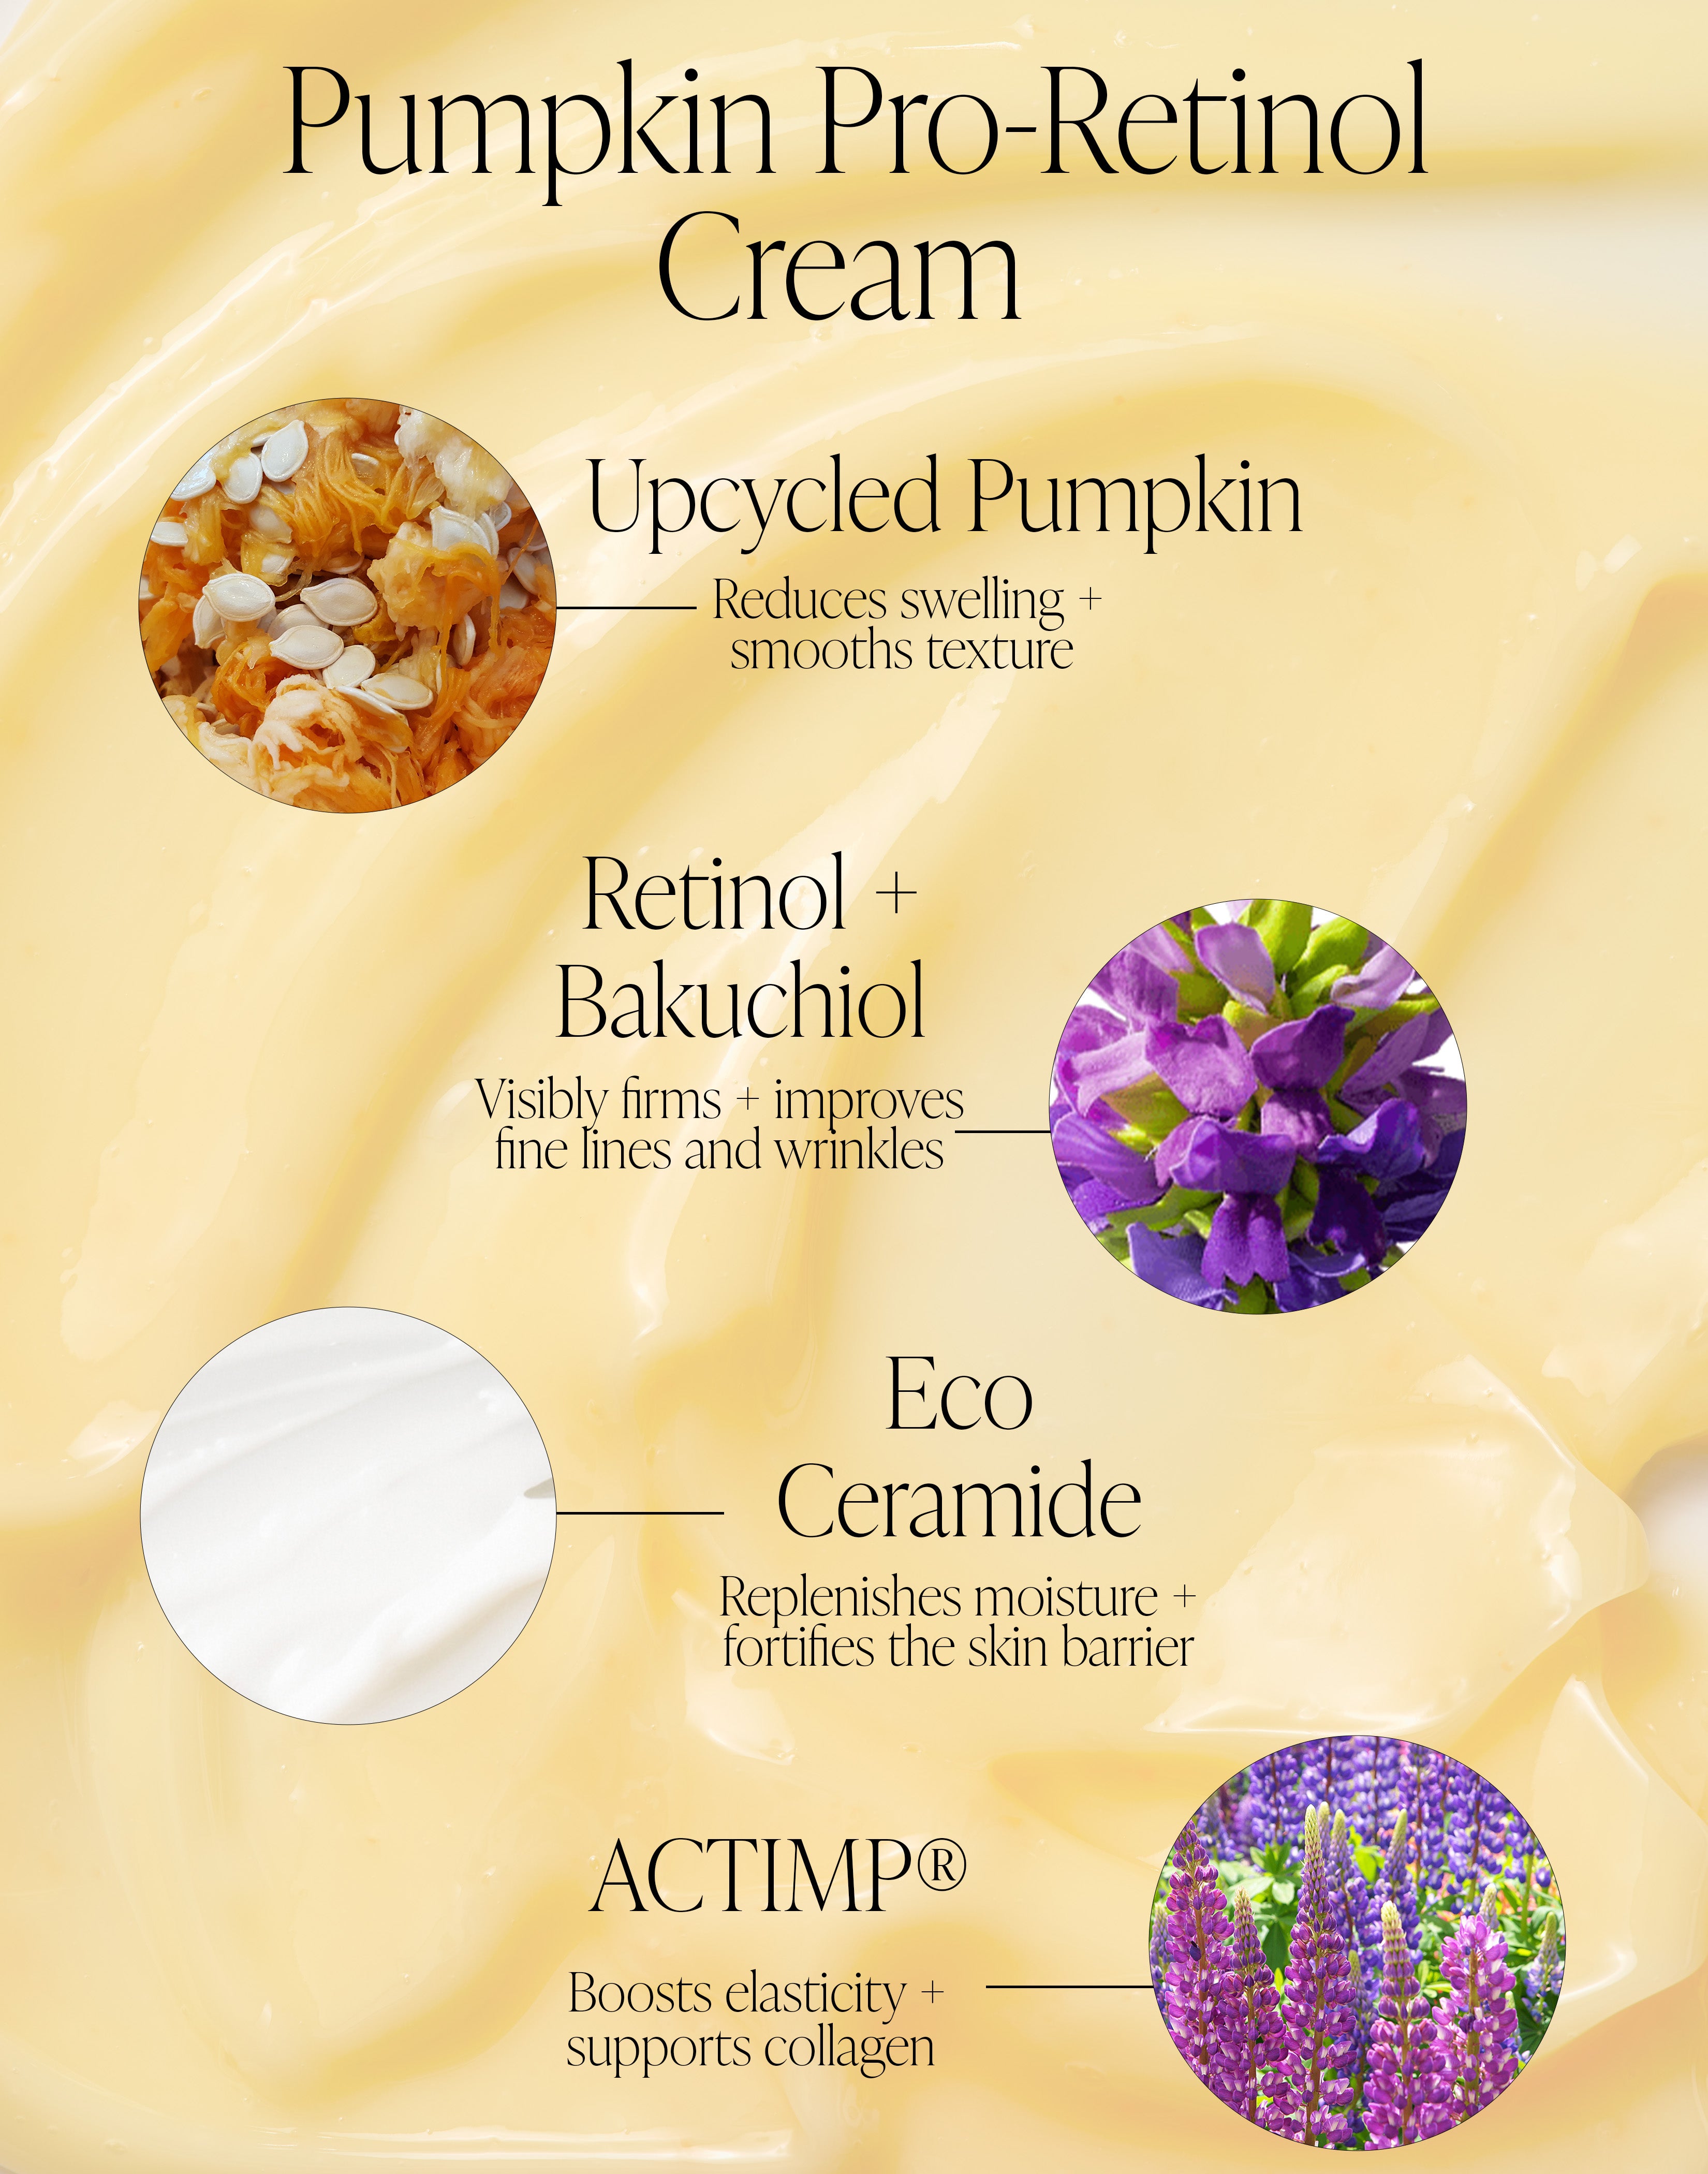 Pumpkin Pro-Retinol Cream